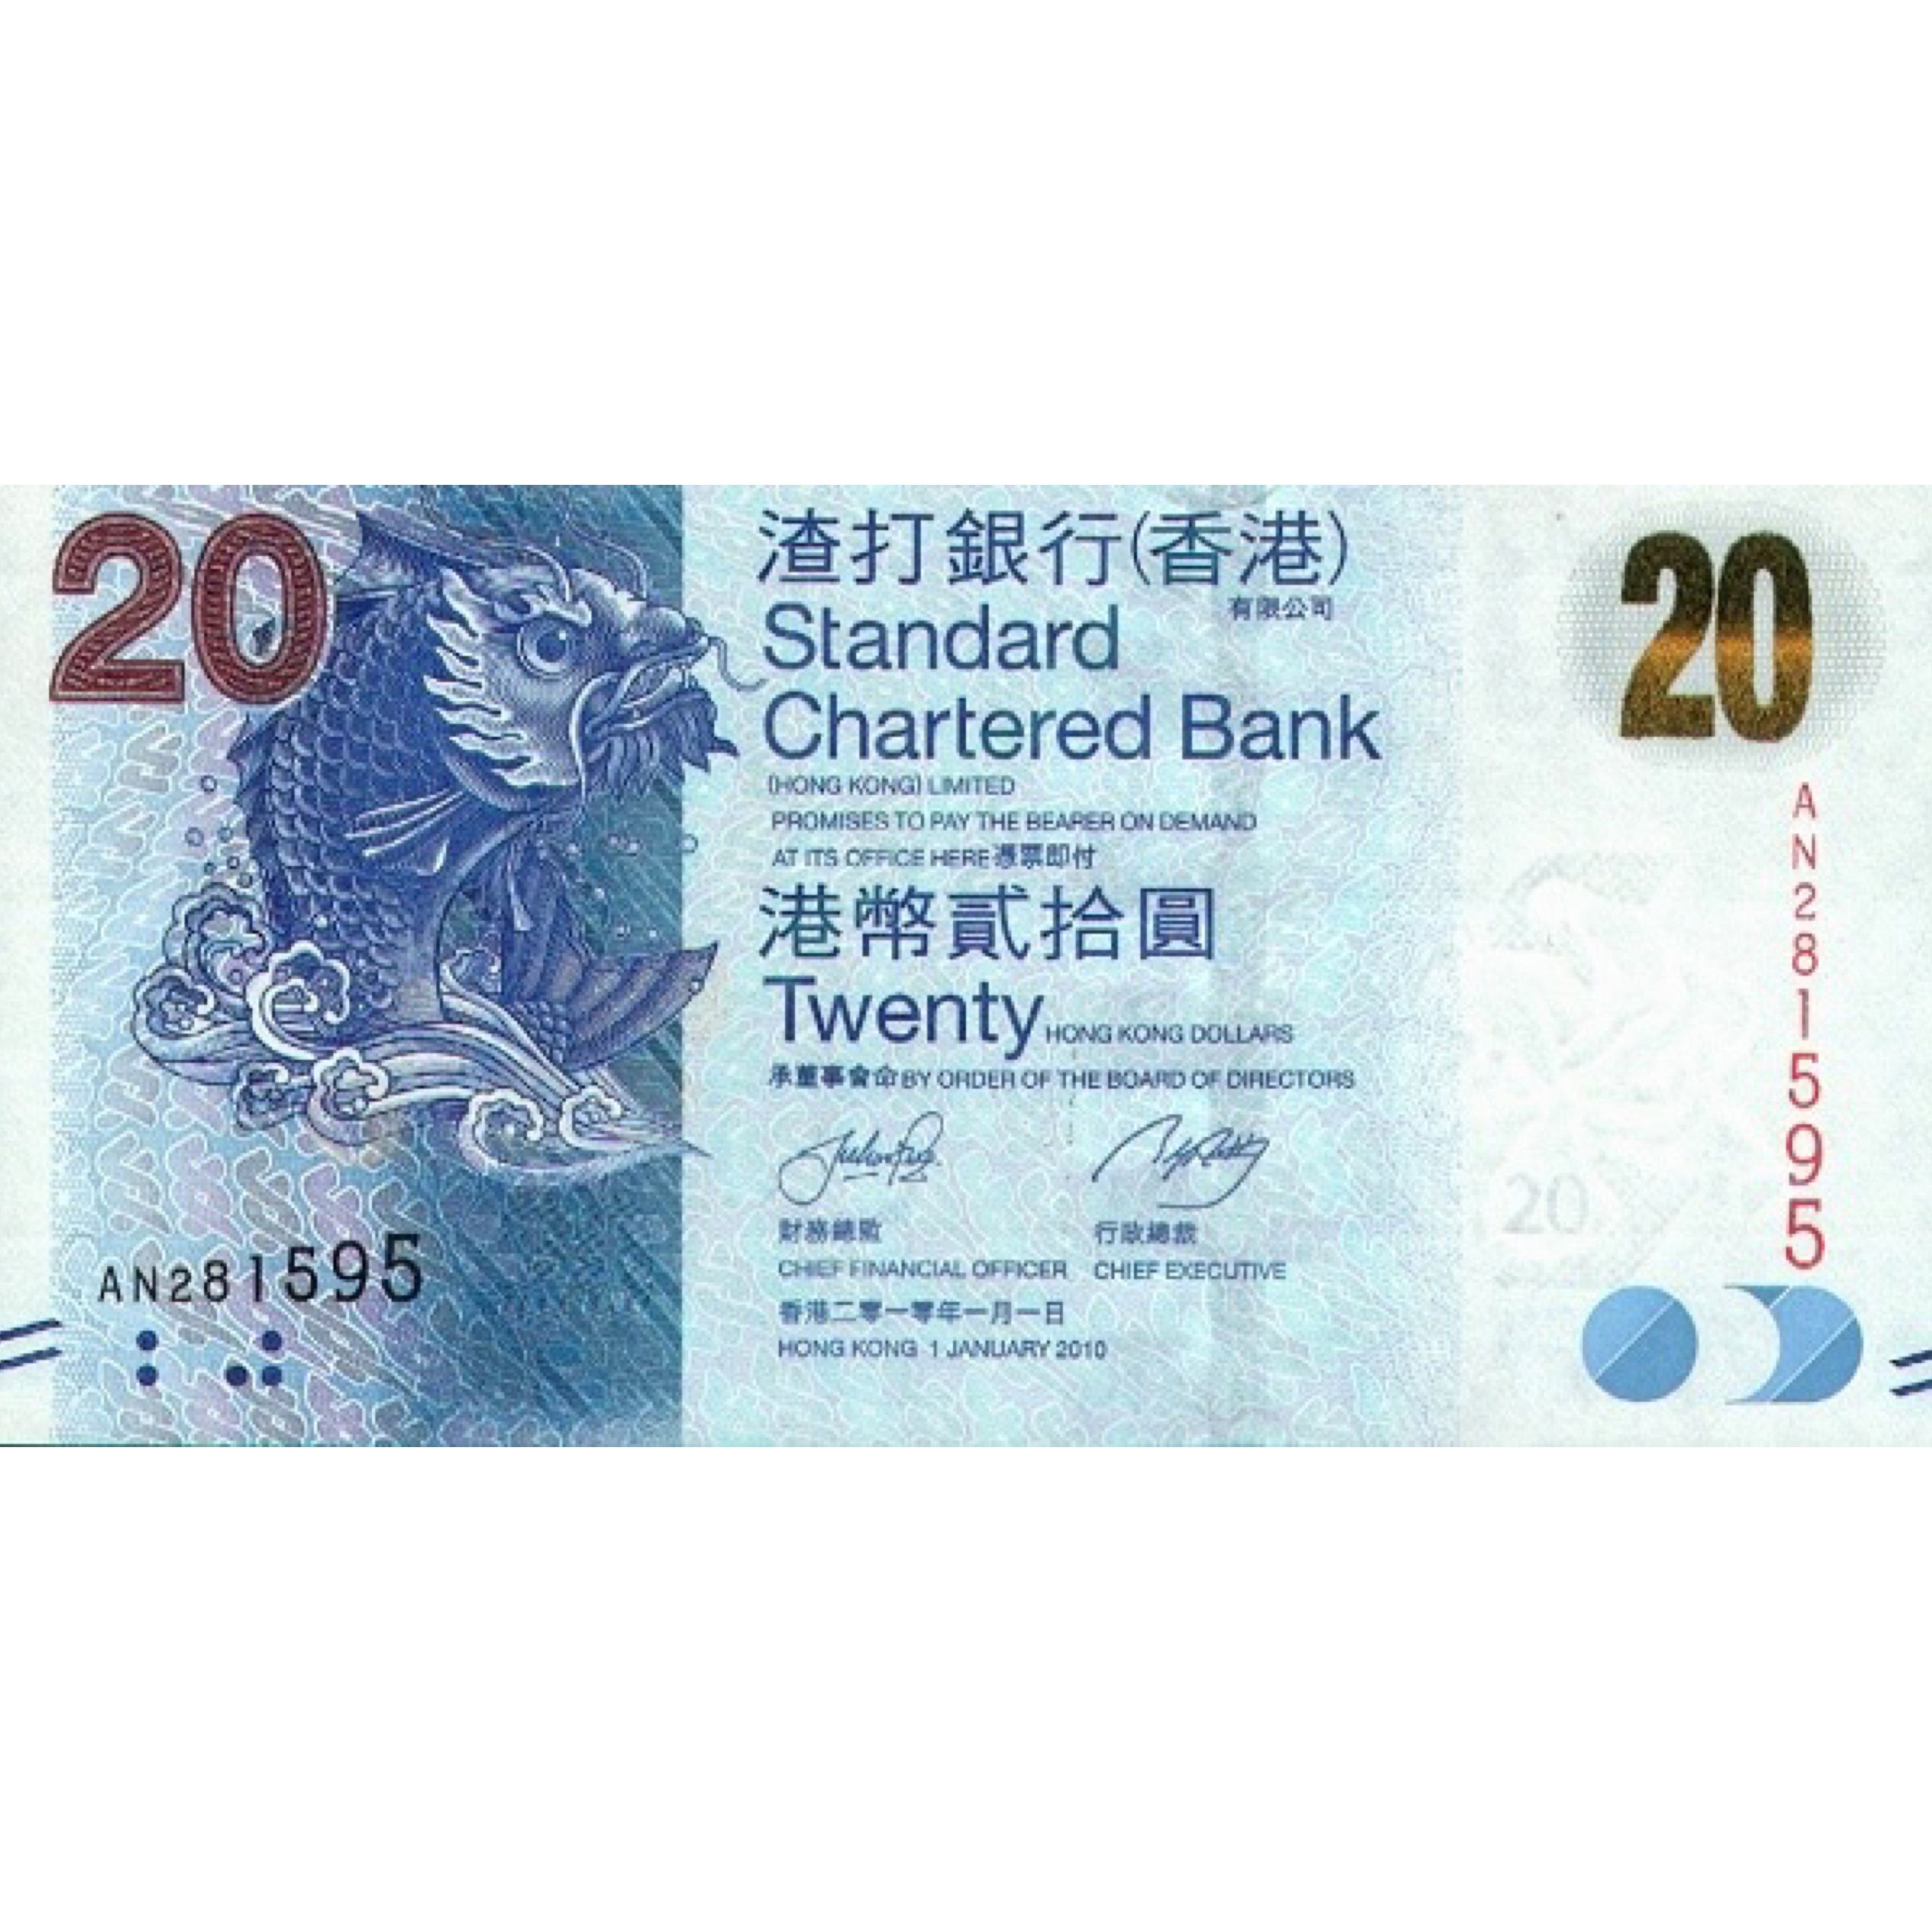 Купить гонконгский доллар. Банкноты 20 долларов Гонконга. 20 Гонконгских долларов купюра. Купюры Chartered Bank 20. Standard Chartered Bank (Hong Kong), Ltd.